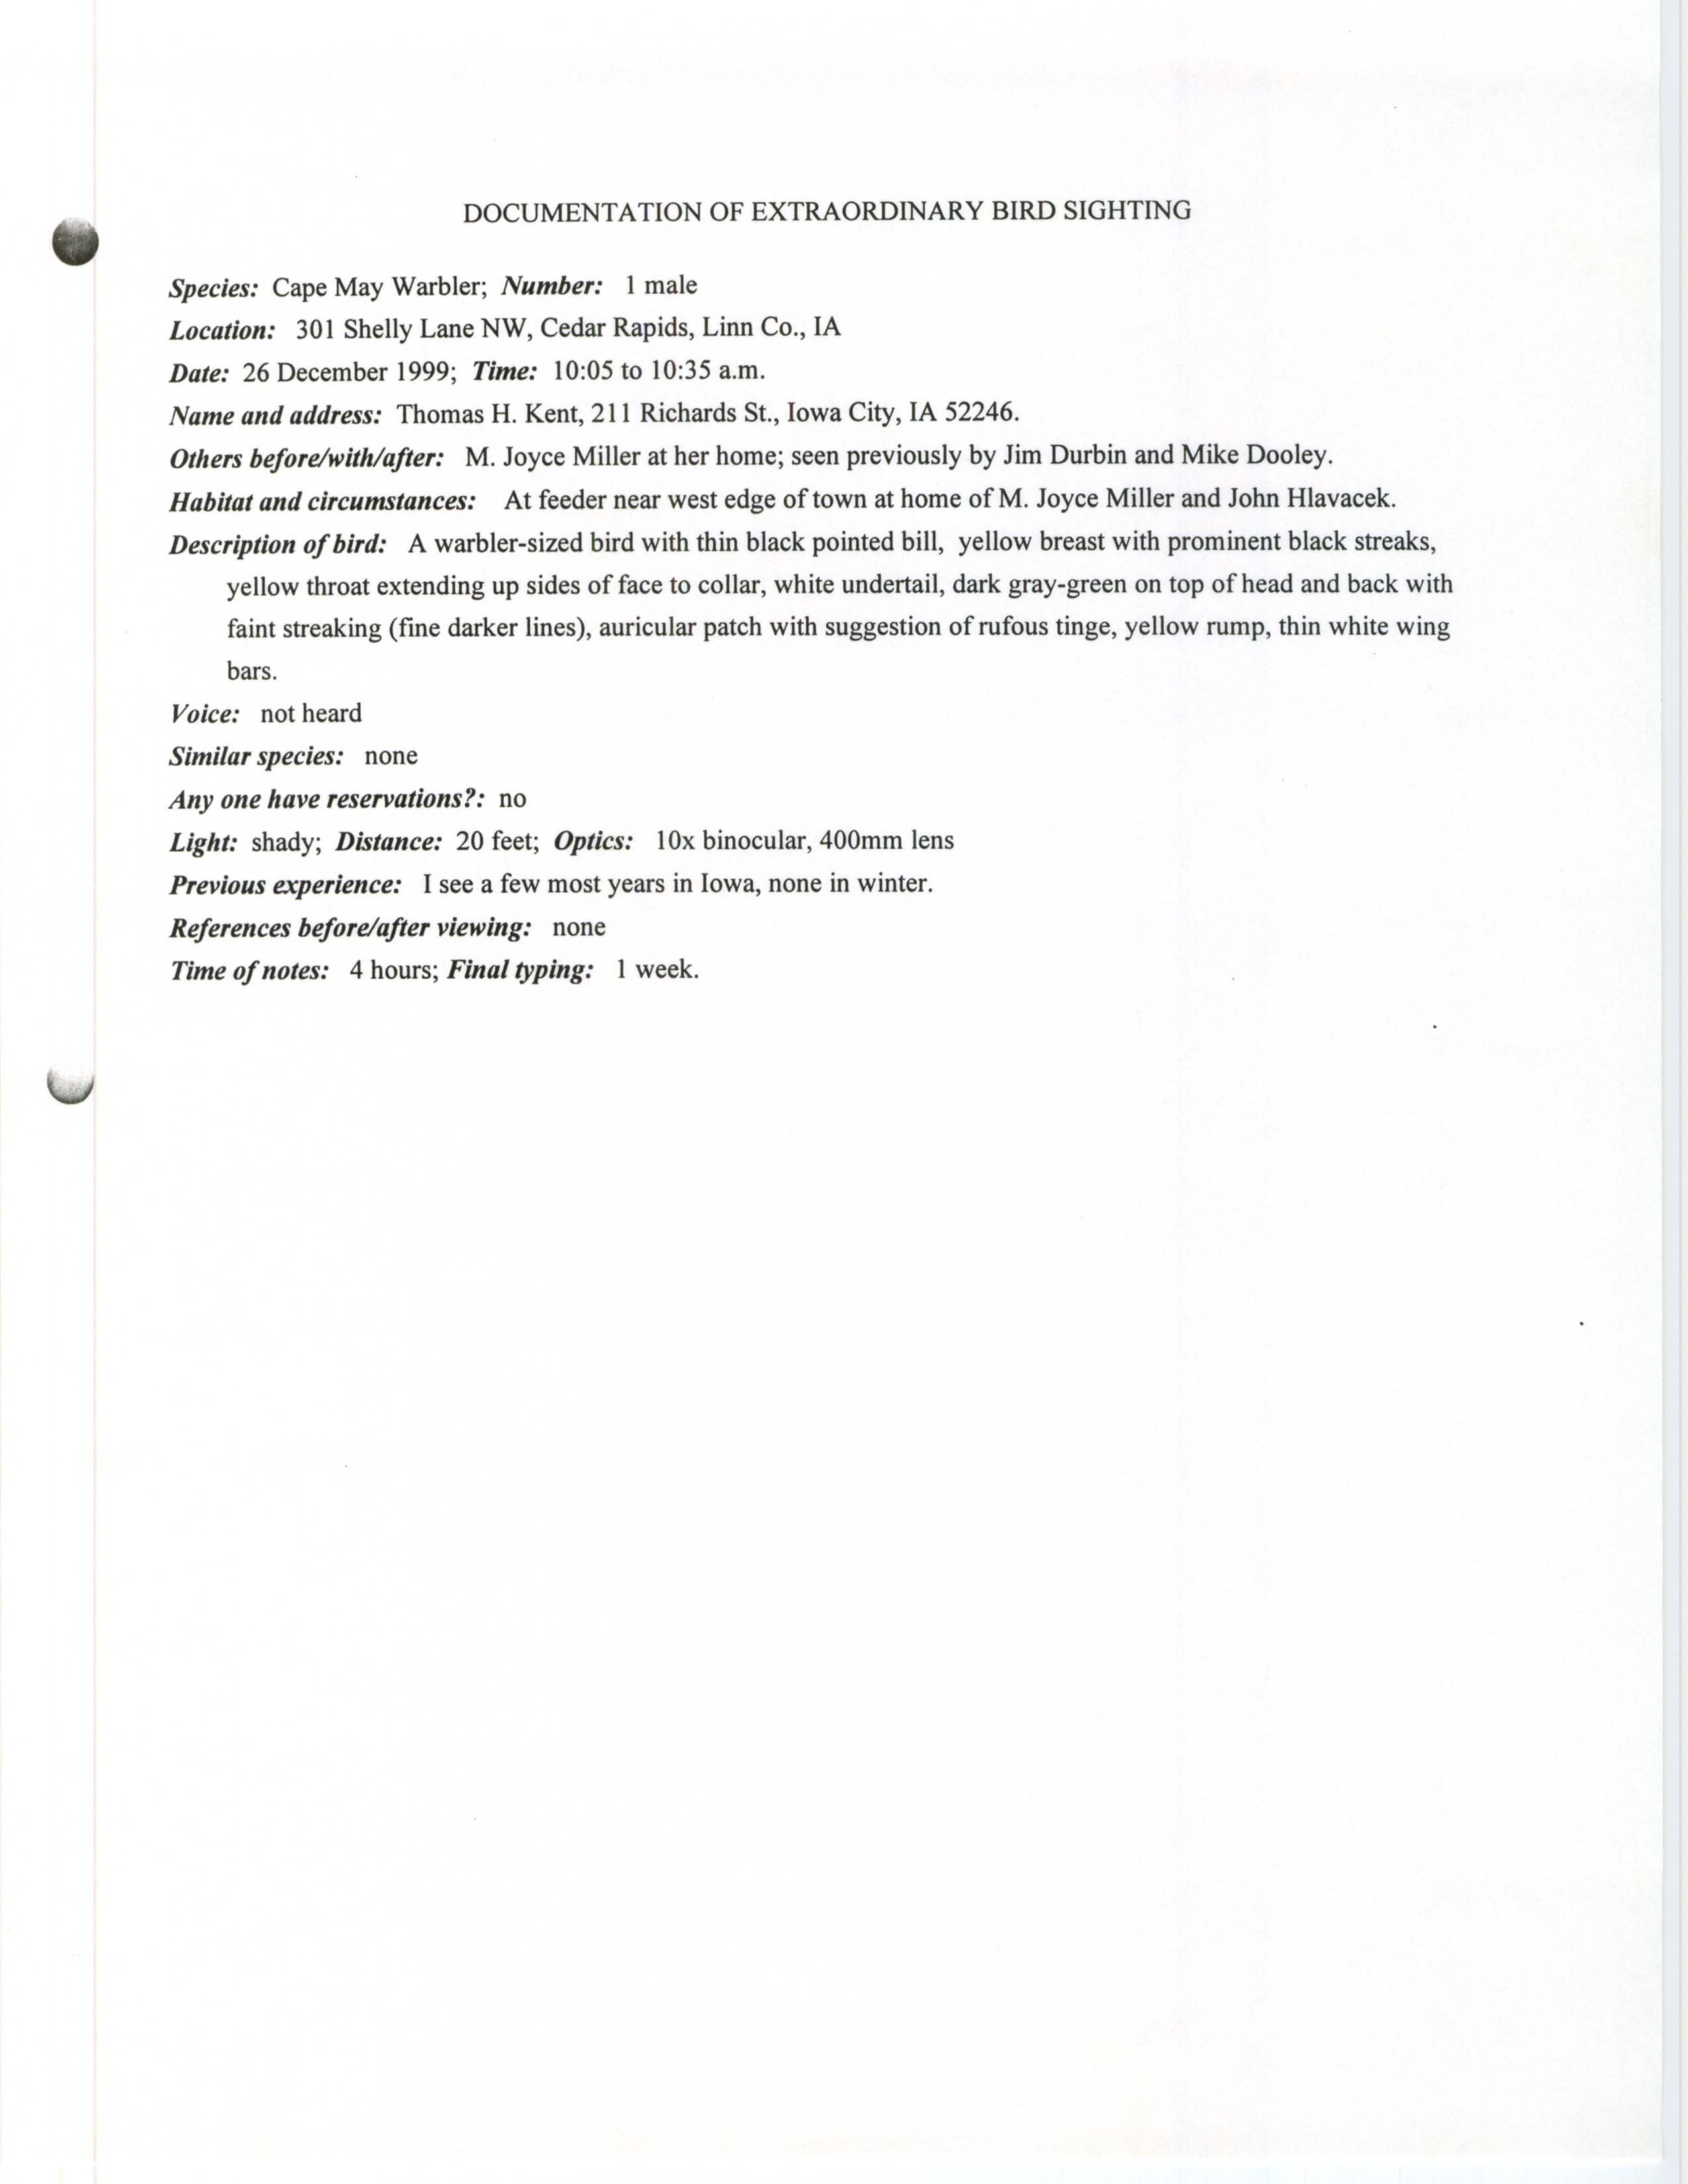 Rare bird documentation form for Cape May Warbler at Cedar Rapids, 1999